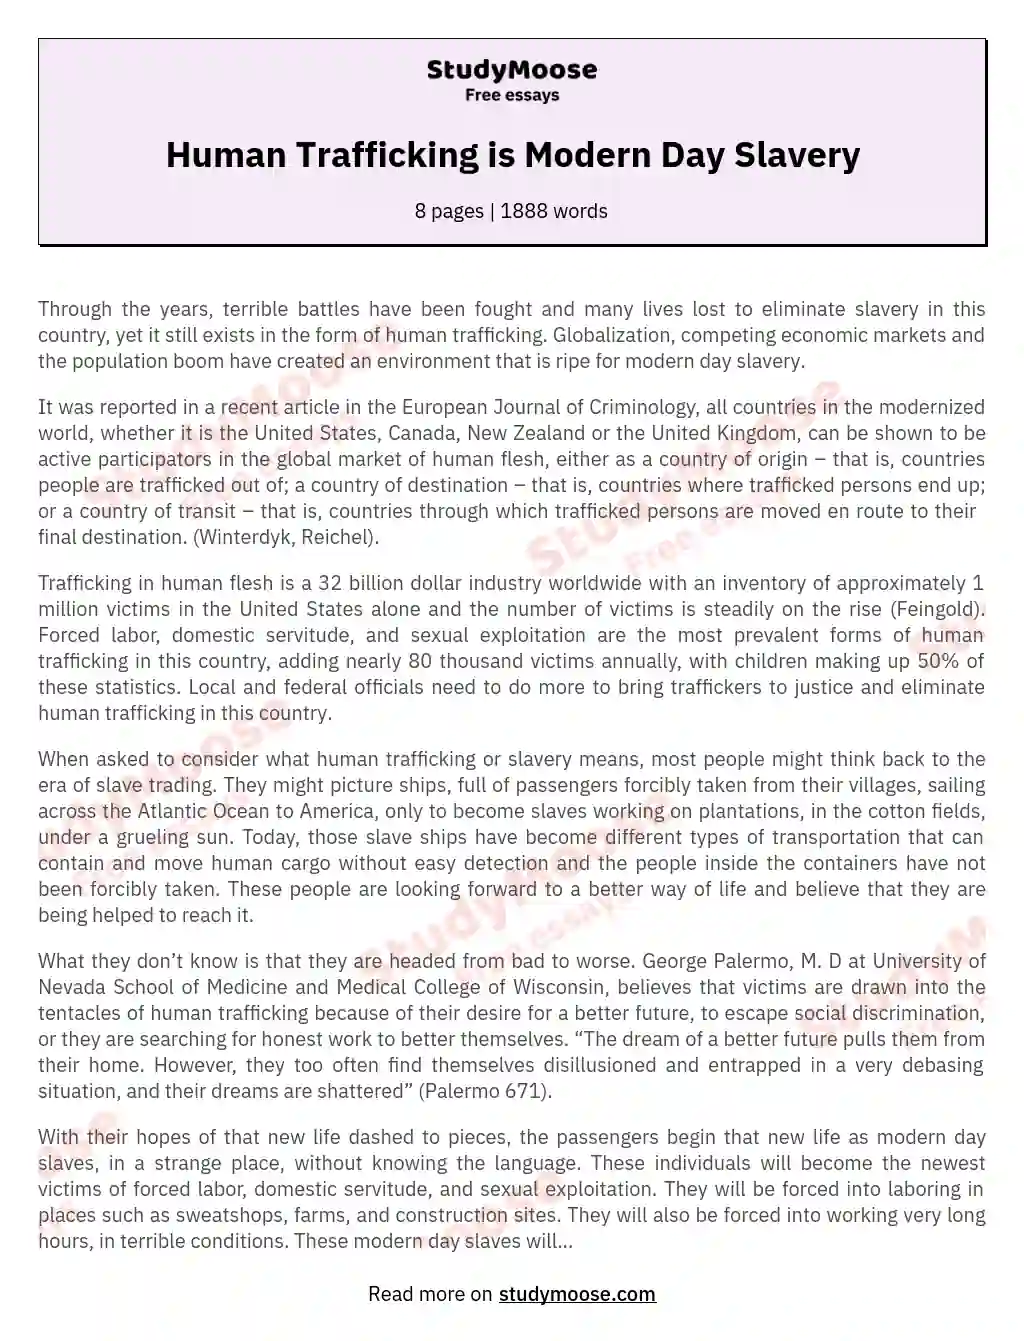 Human Trafficking is Modern Day Slavery essay